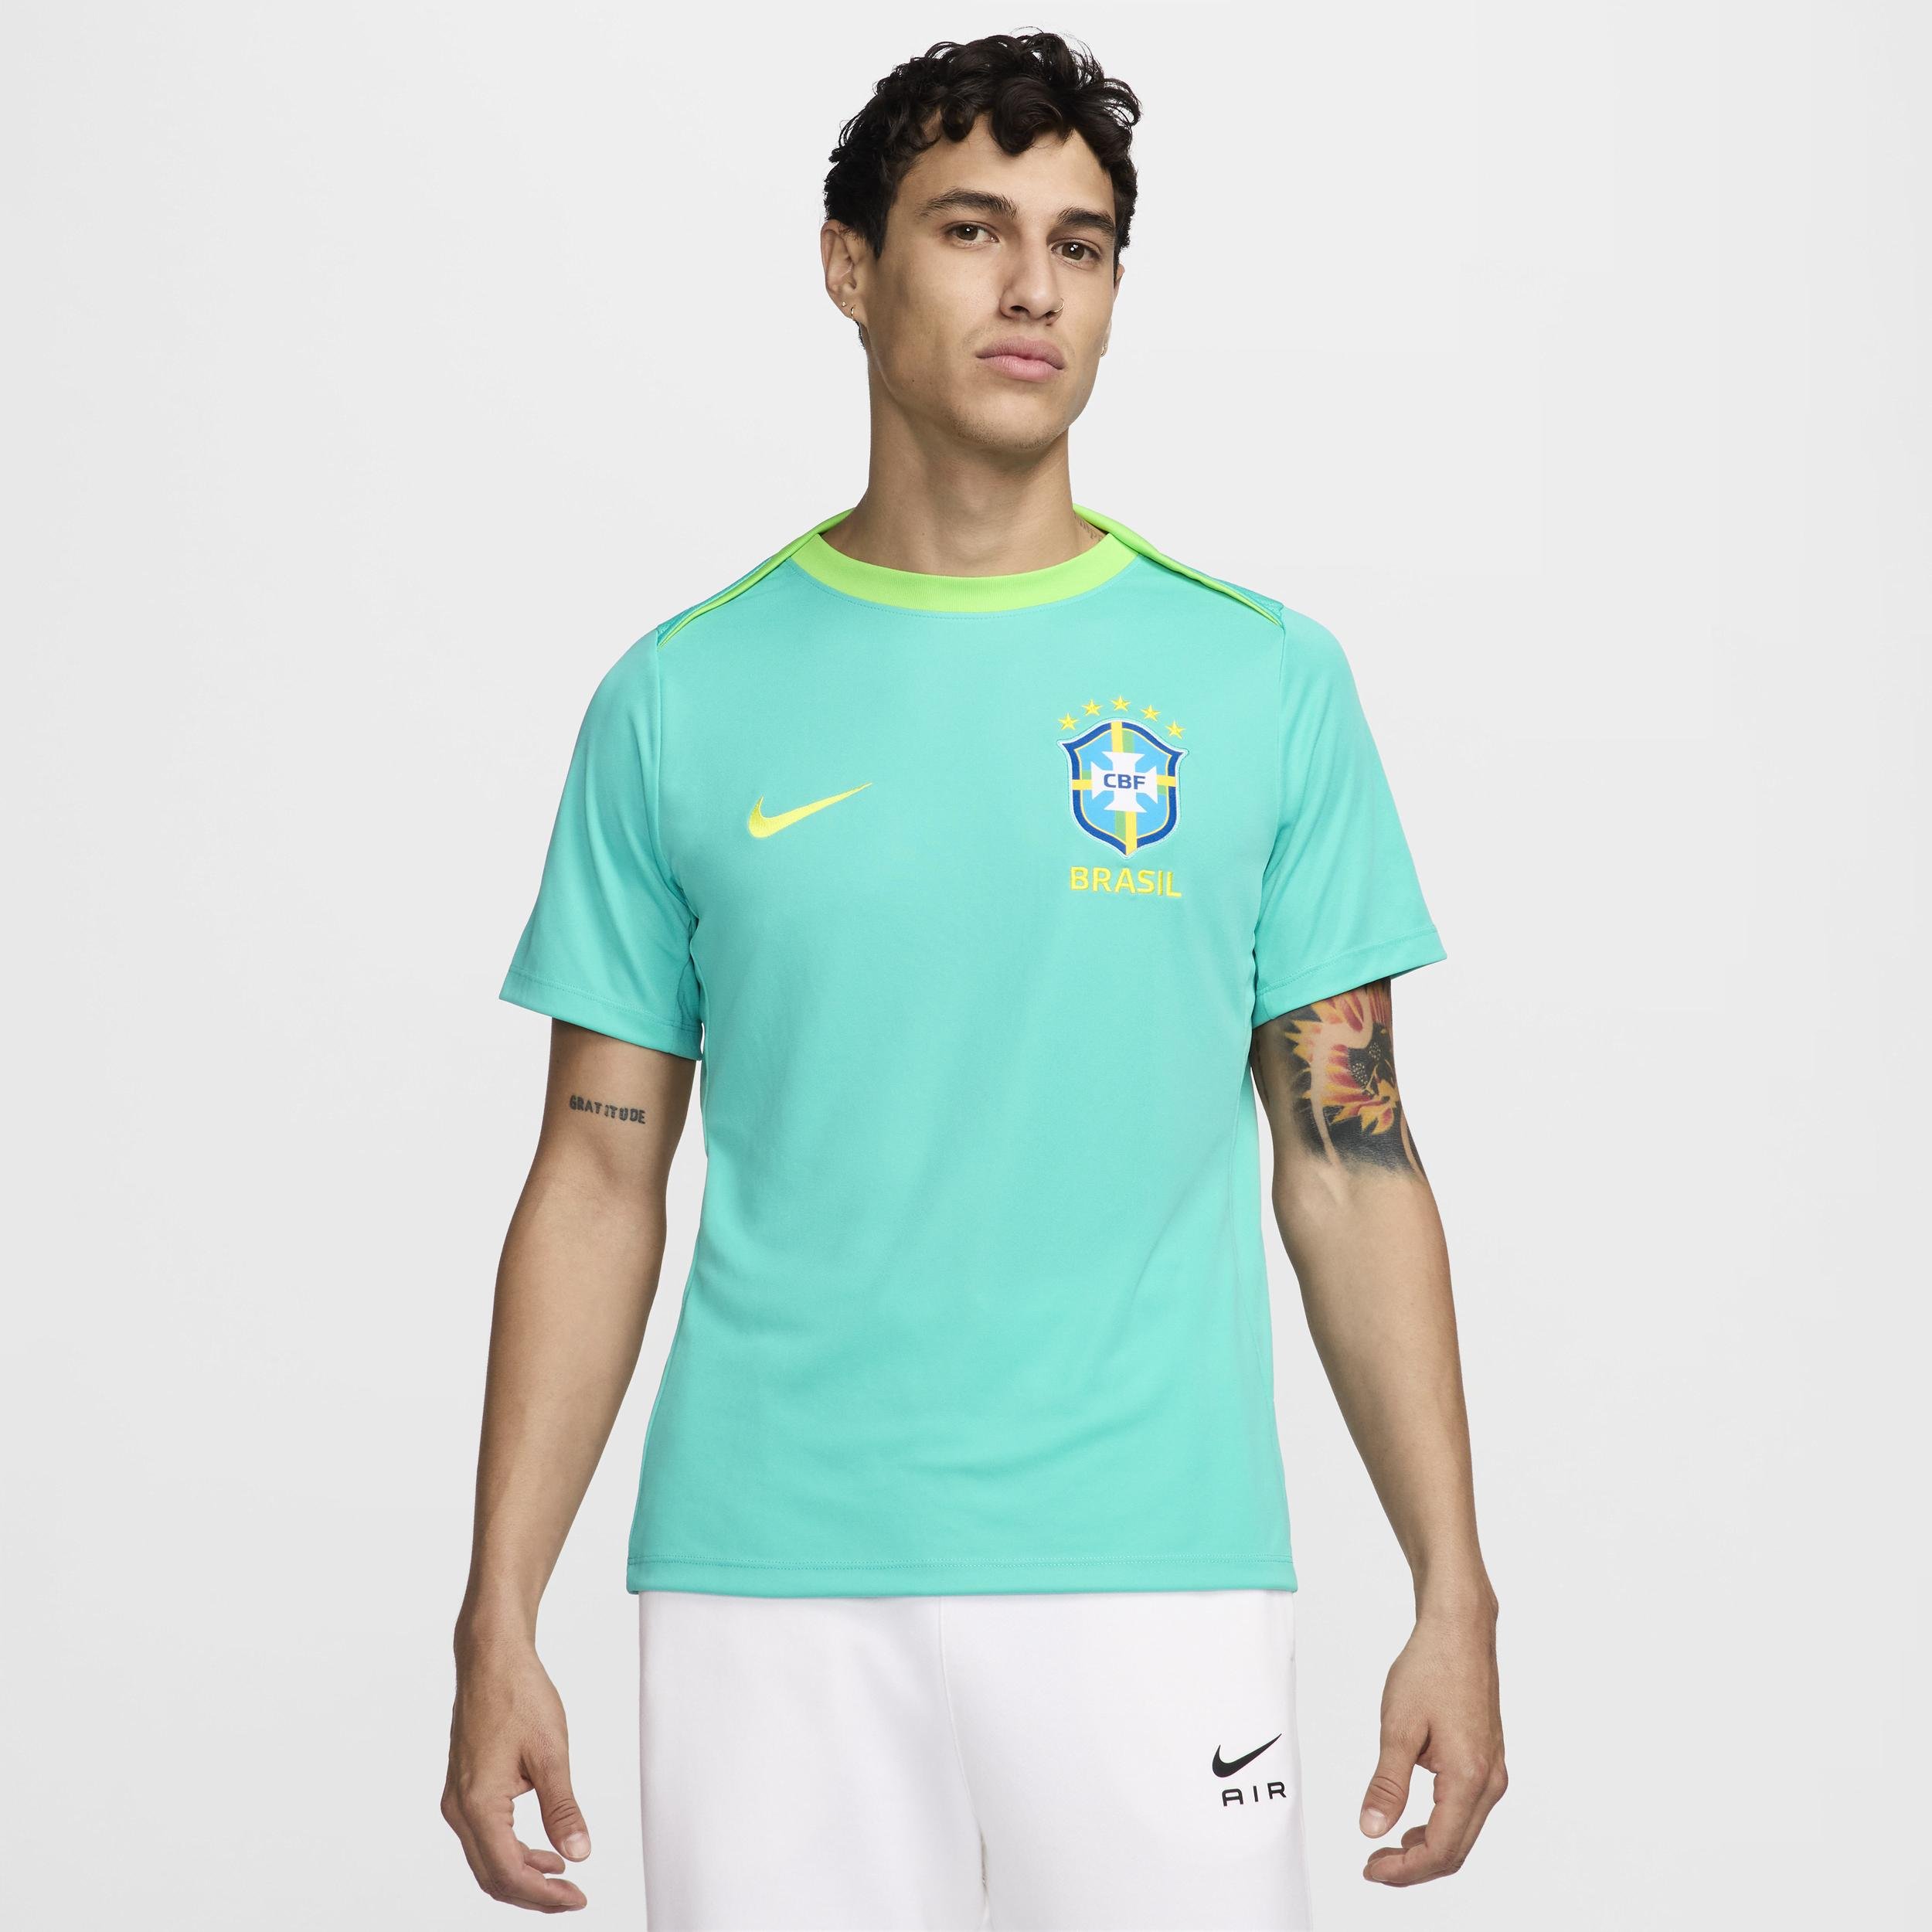 Brazil Academy Pro Nike Men's Dri-FIT Soccer Top by NIKE